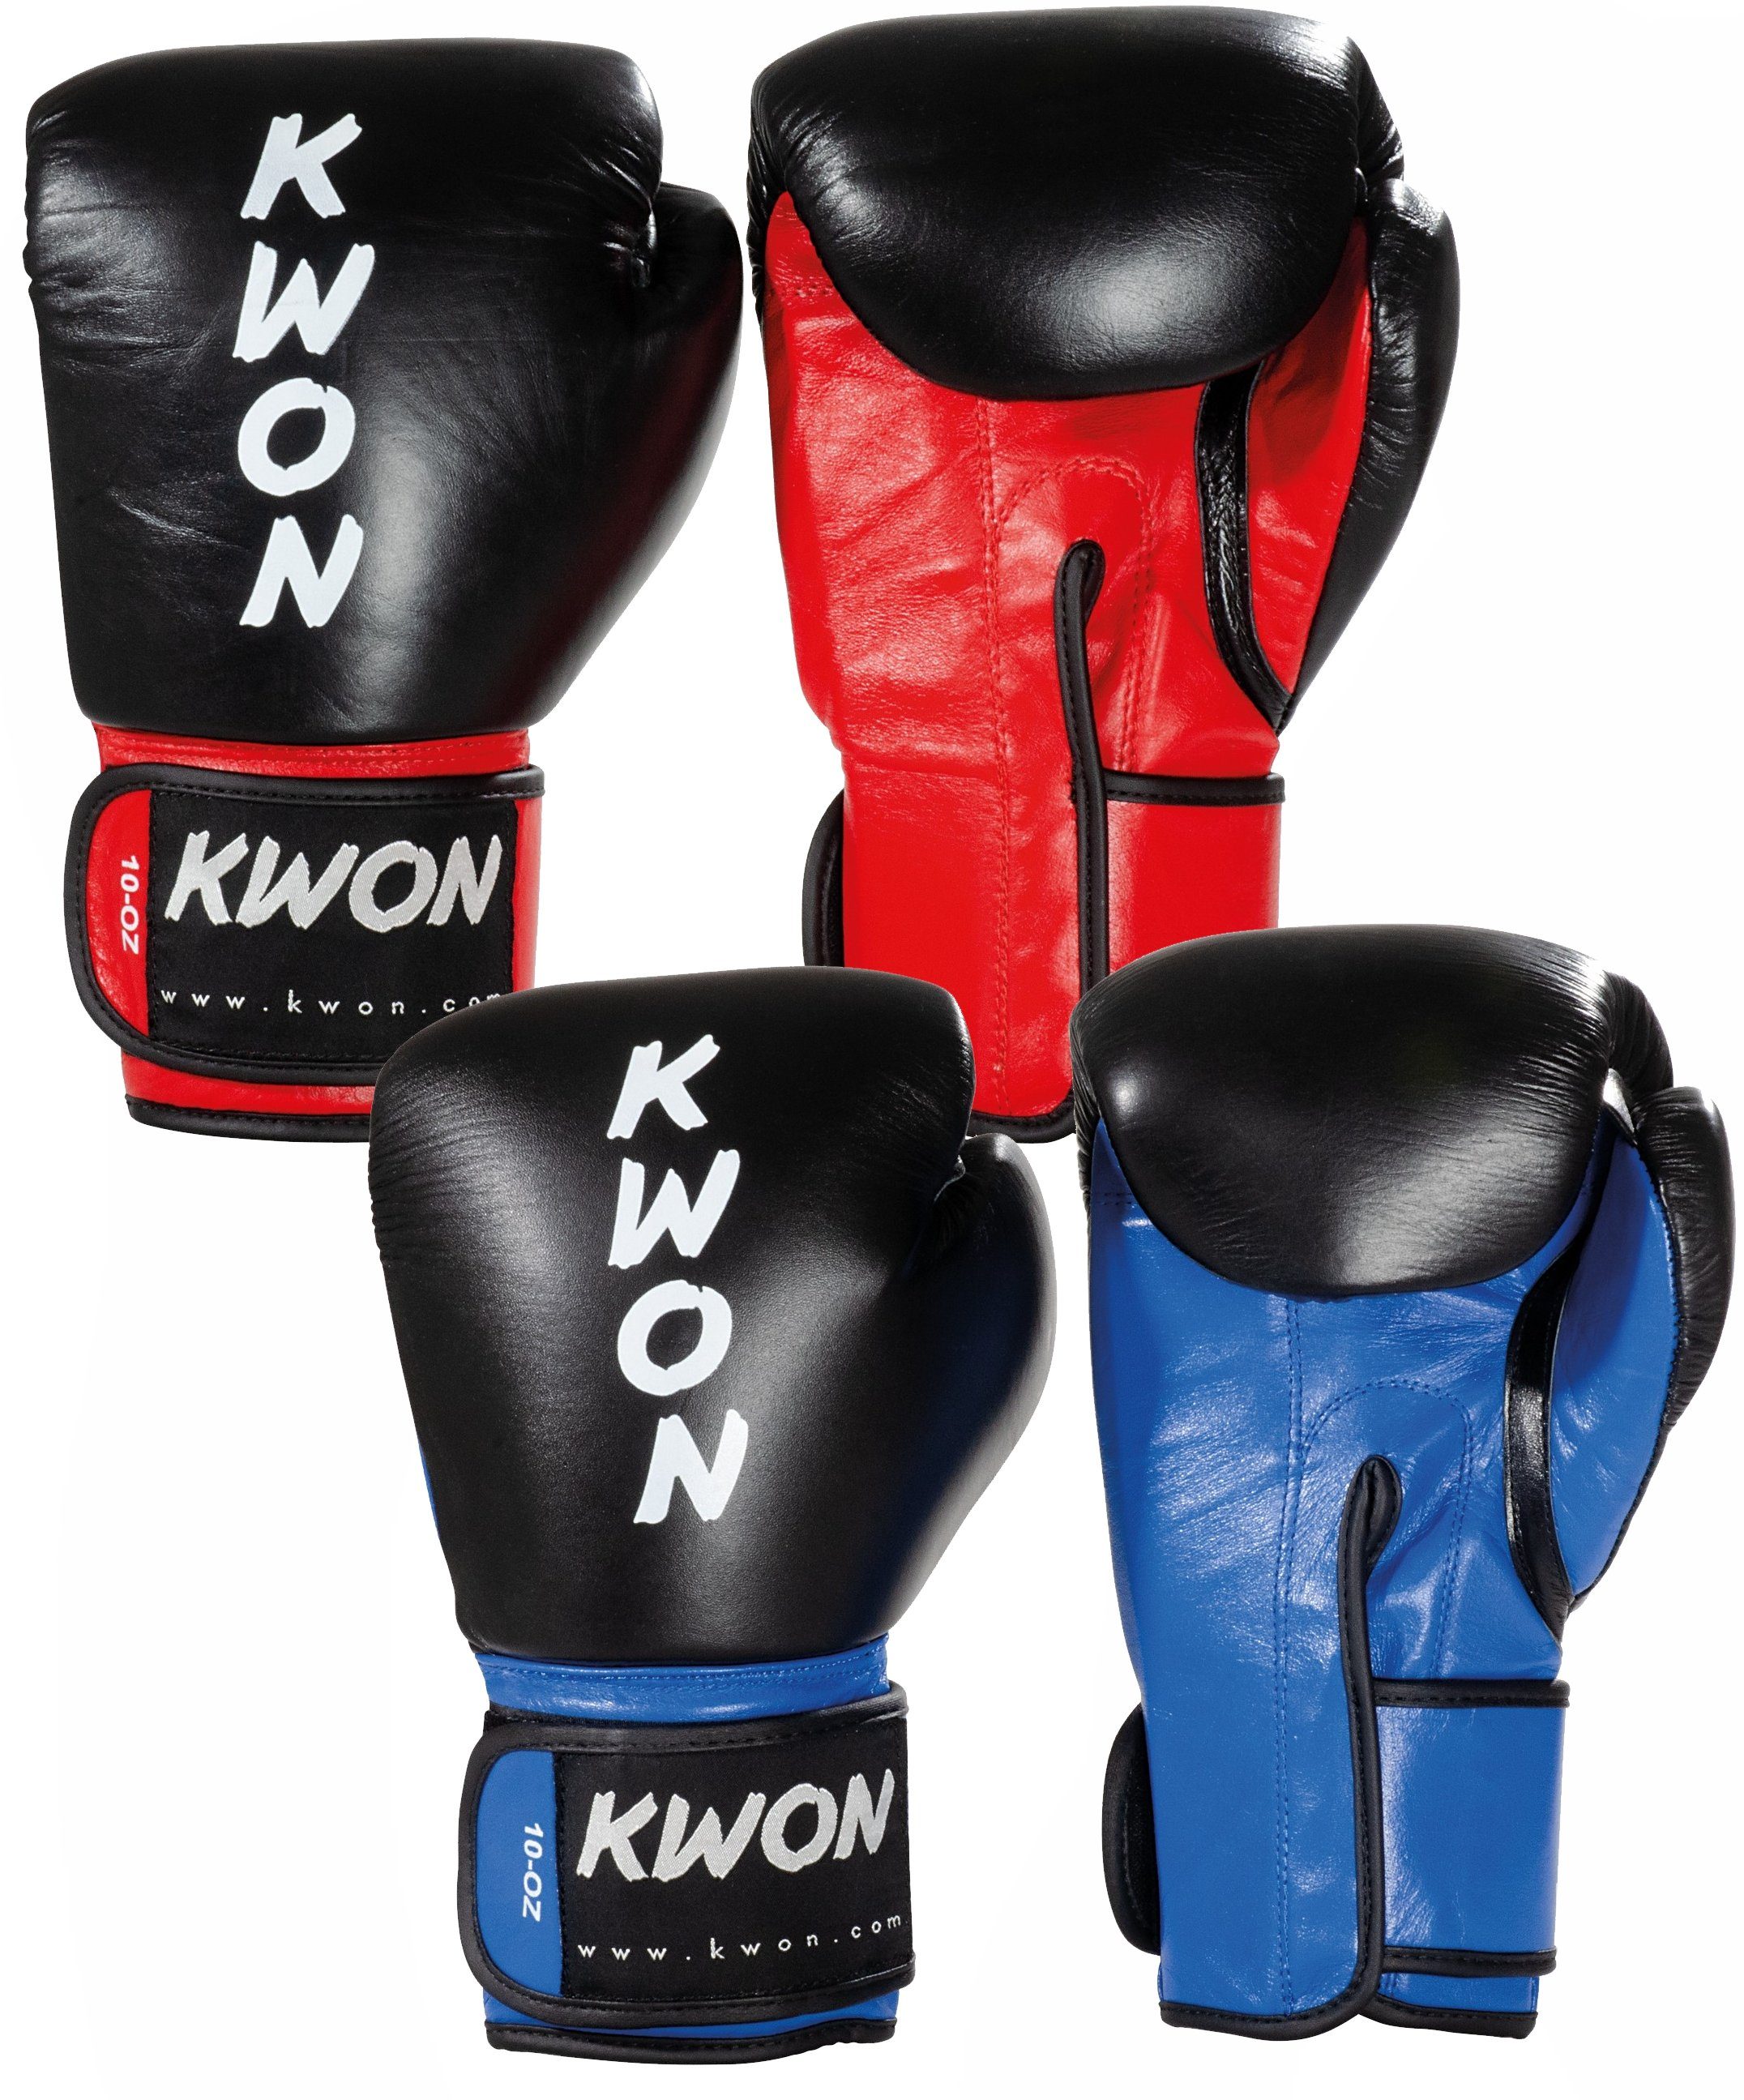 KWON Boxhandschuhe Profi KO Champ Leder Box-Handschuhe Boxen Kickboxen Thaiboxen (Vollkontakt, Paar), Ergo Form, Profi Ausführung, Echtes Leder, WKU anerkannt schwarz/blau